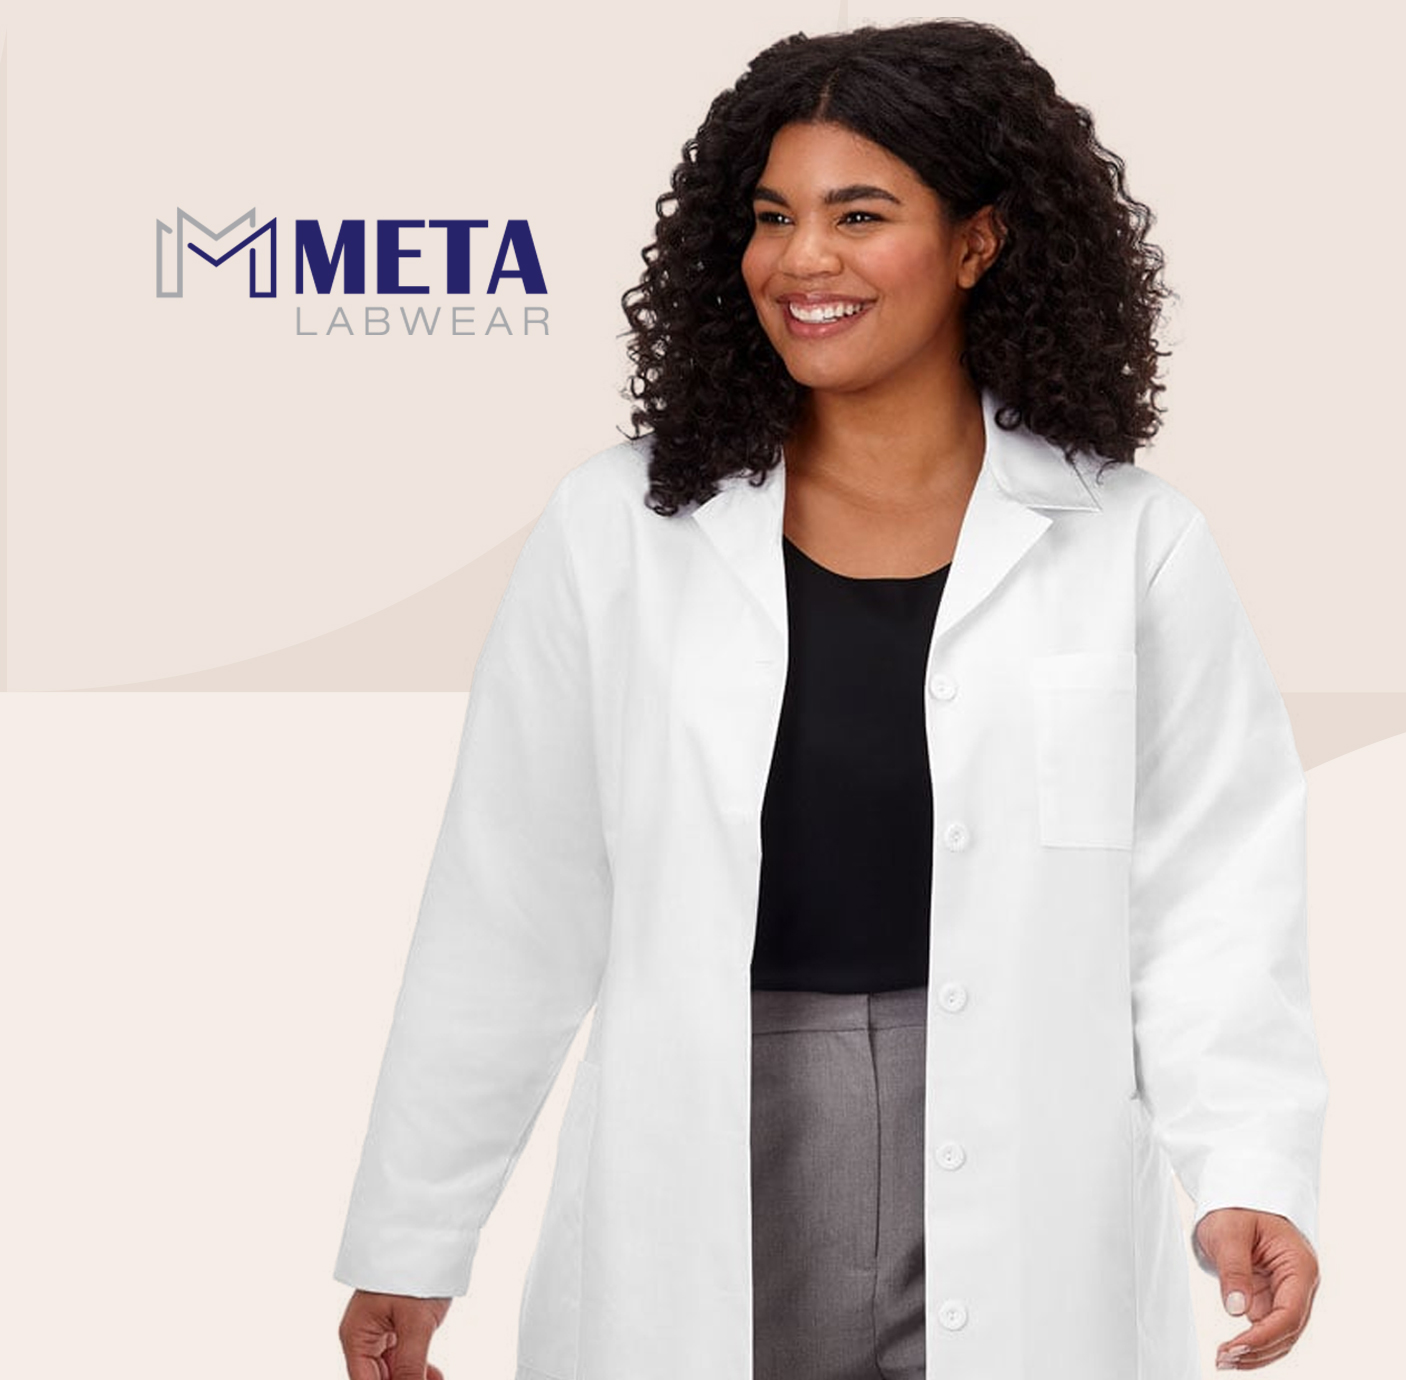 Viewing Meta Labwear Lab Coats